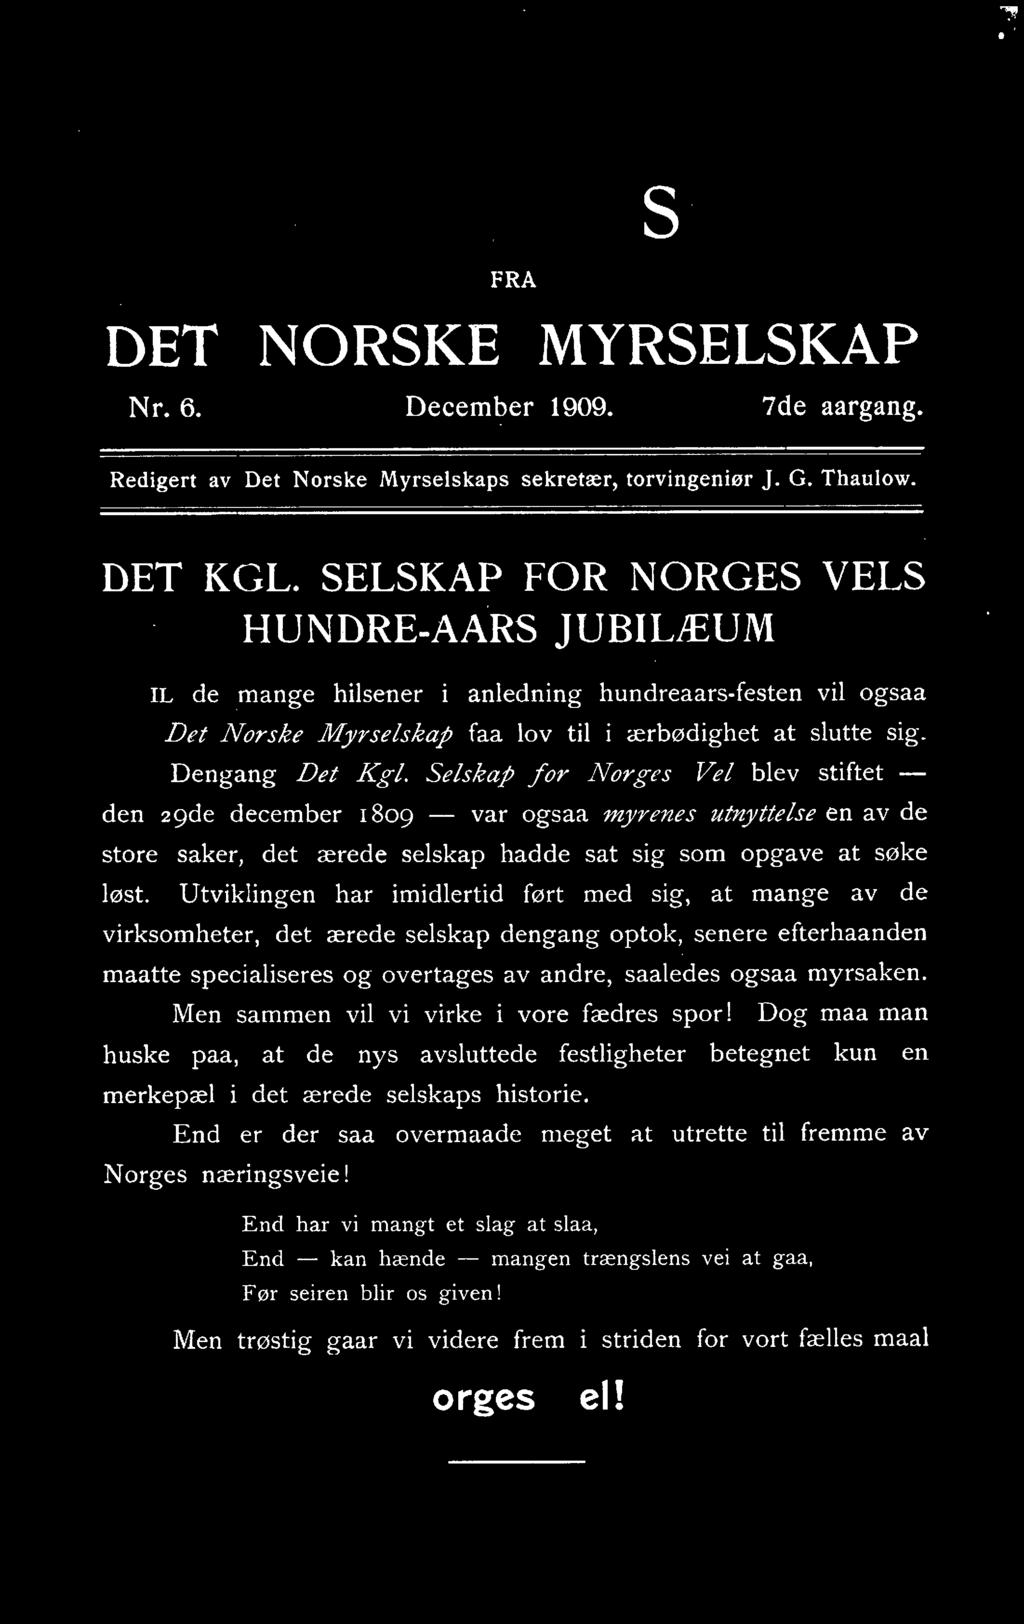 for Norges Vel blev stiftet - den 29de december 1809 - var ogsaa myrenes utnyttelse en av de store saker, det ærede selskap hadde sat sig som opgave at søke løst.